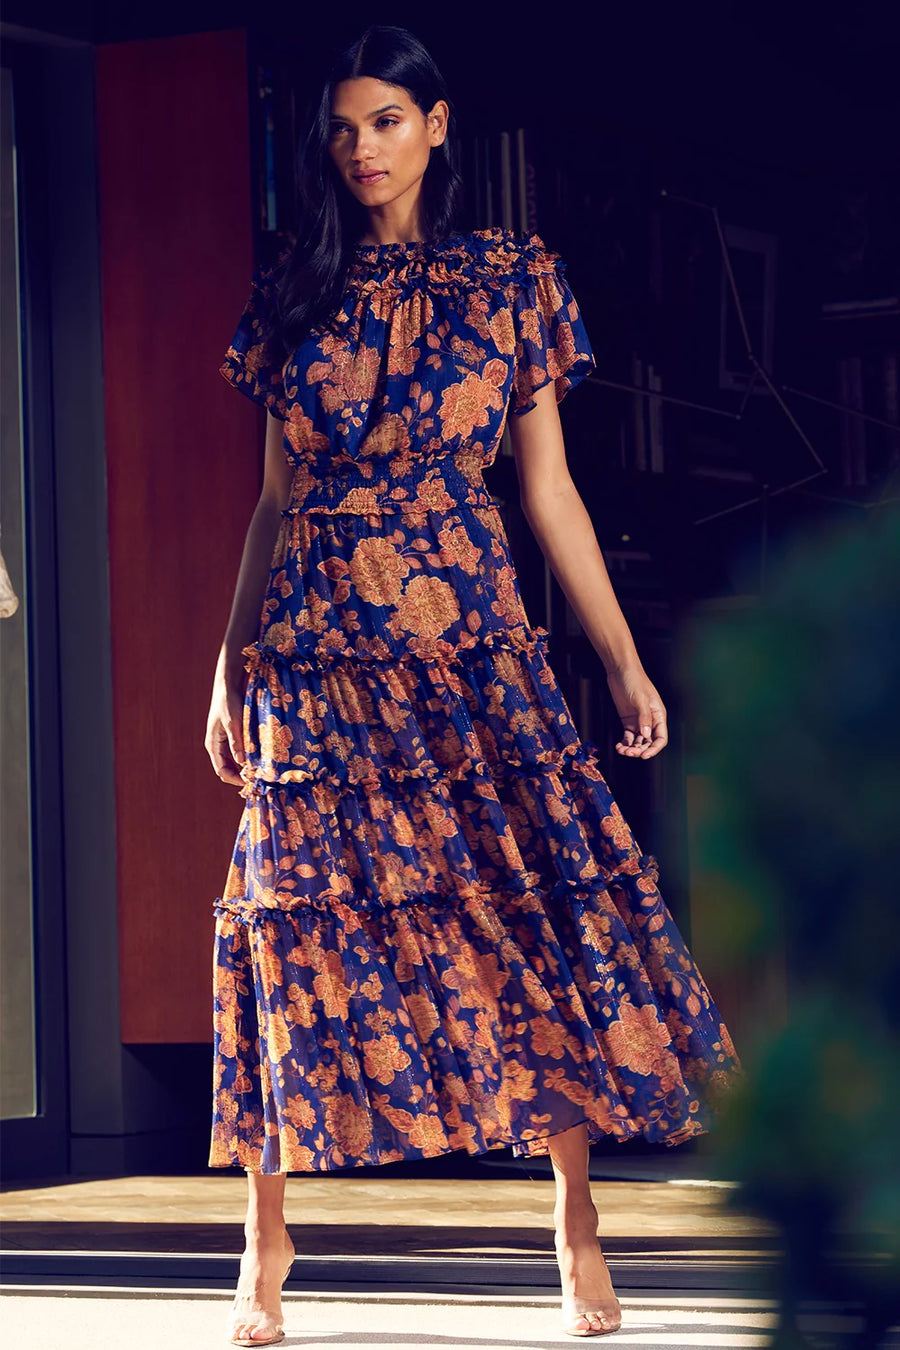 Suki Dress - Blue Marigold Flora